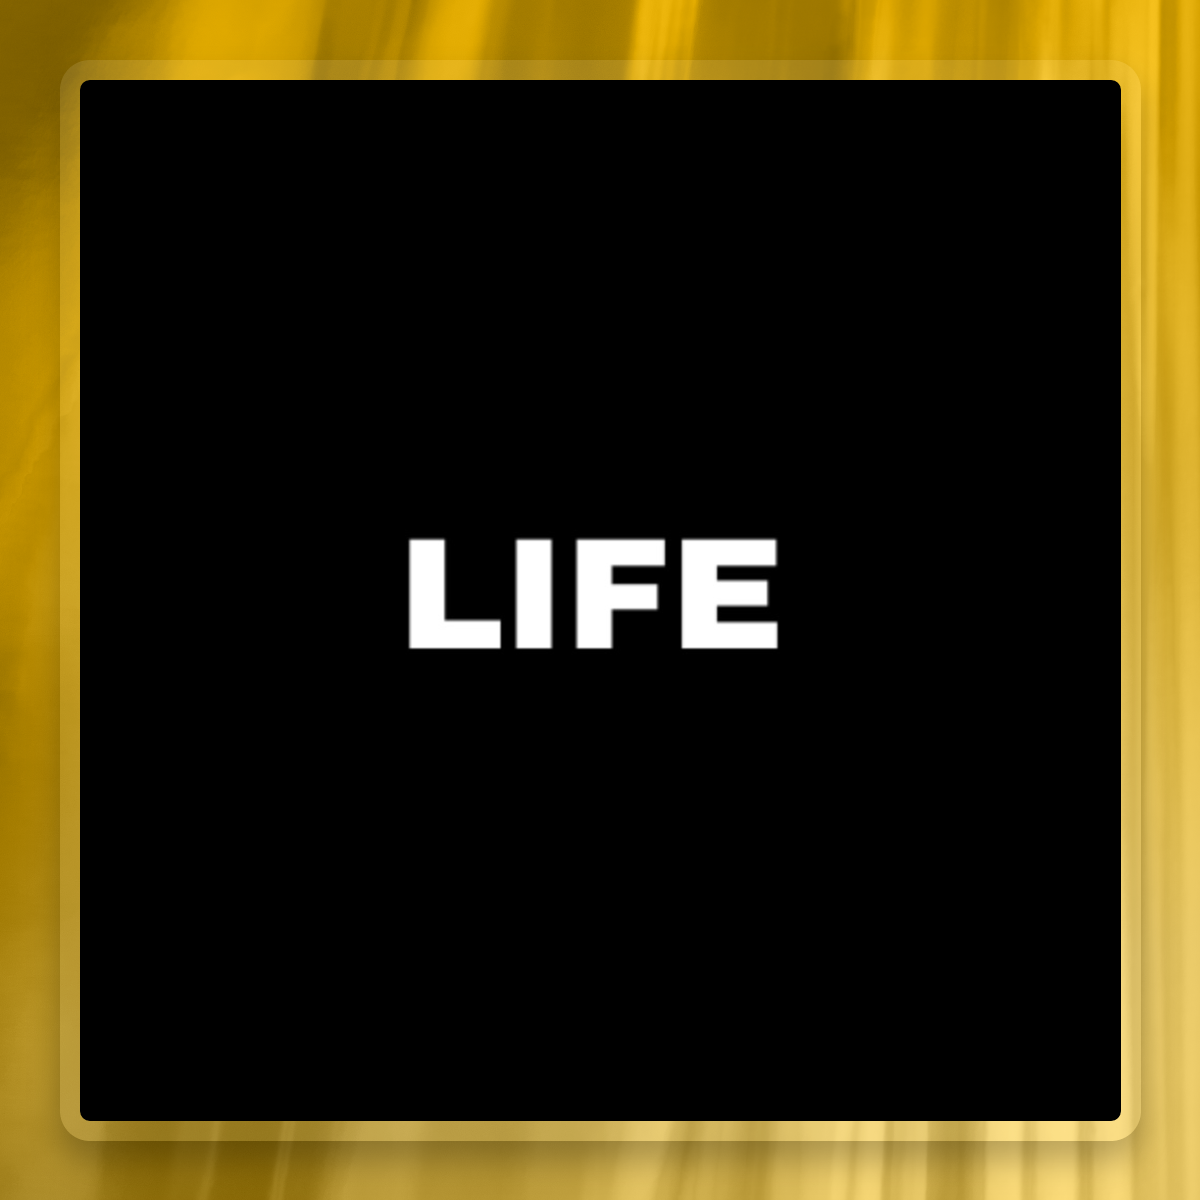 Life - Track 3